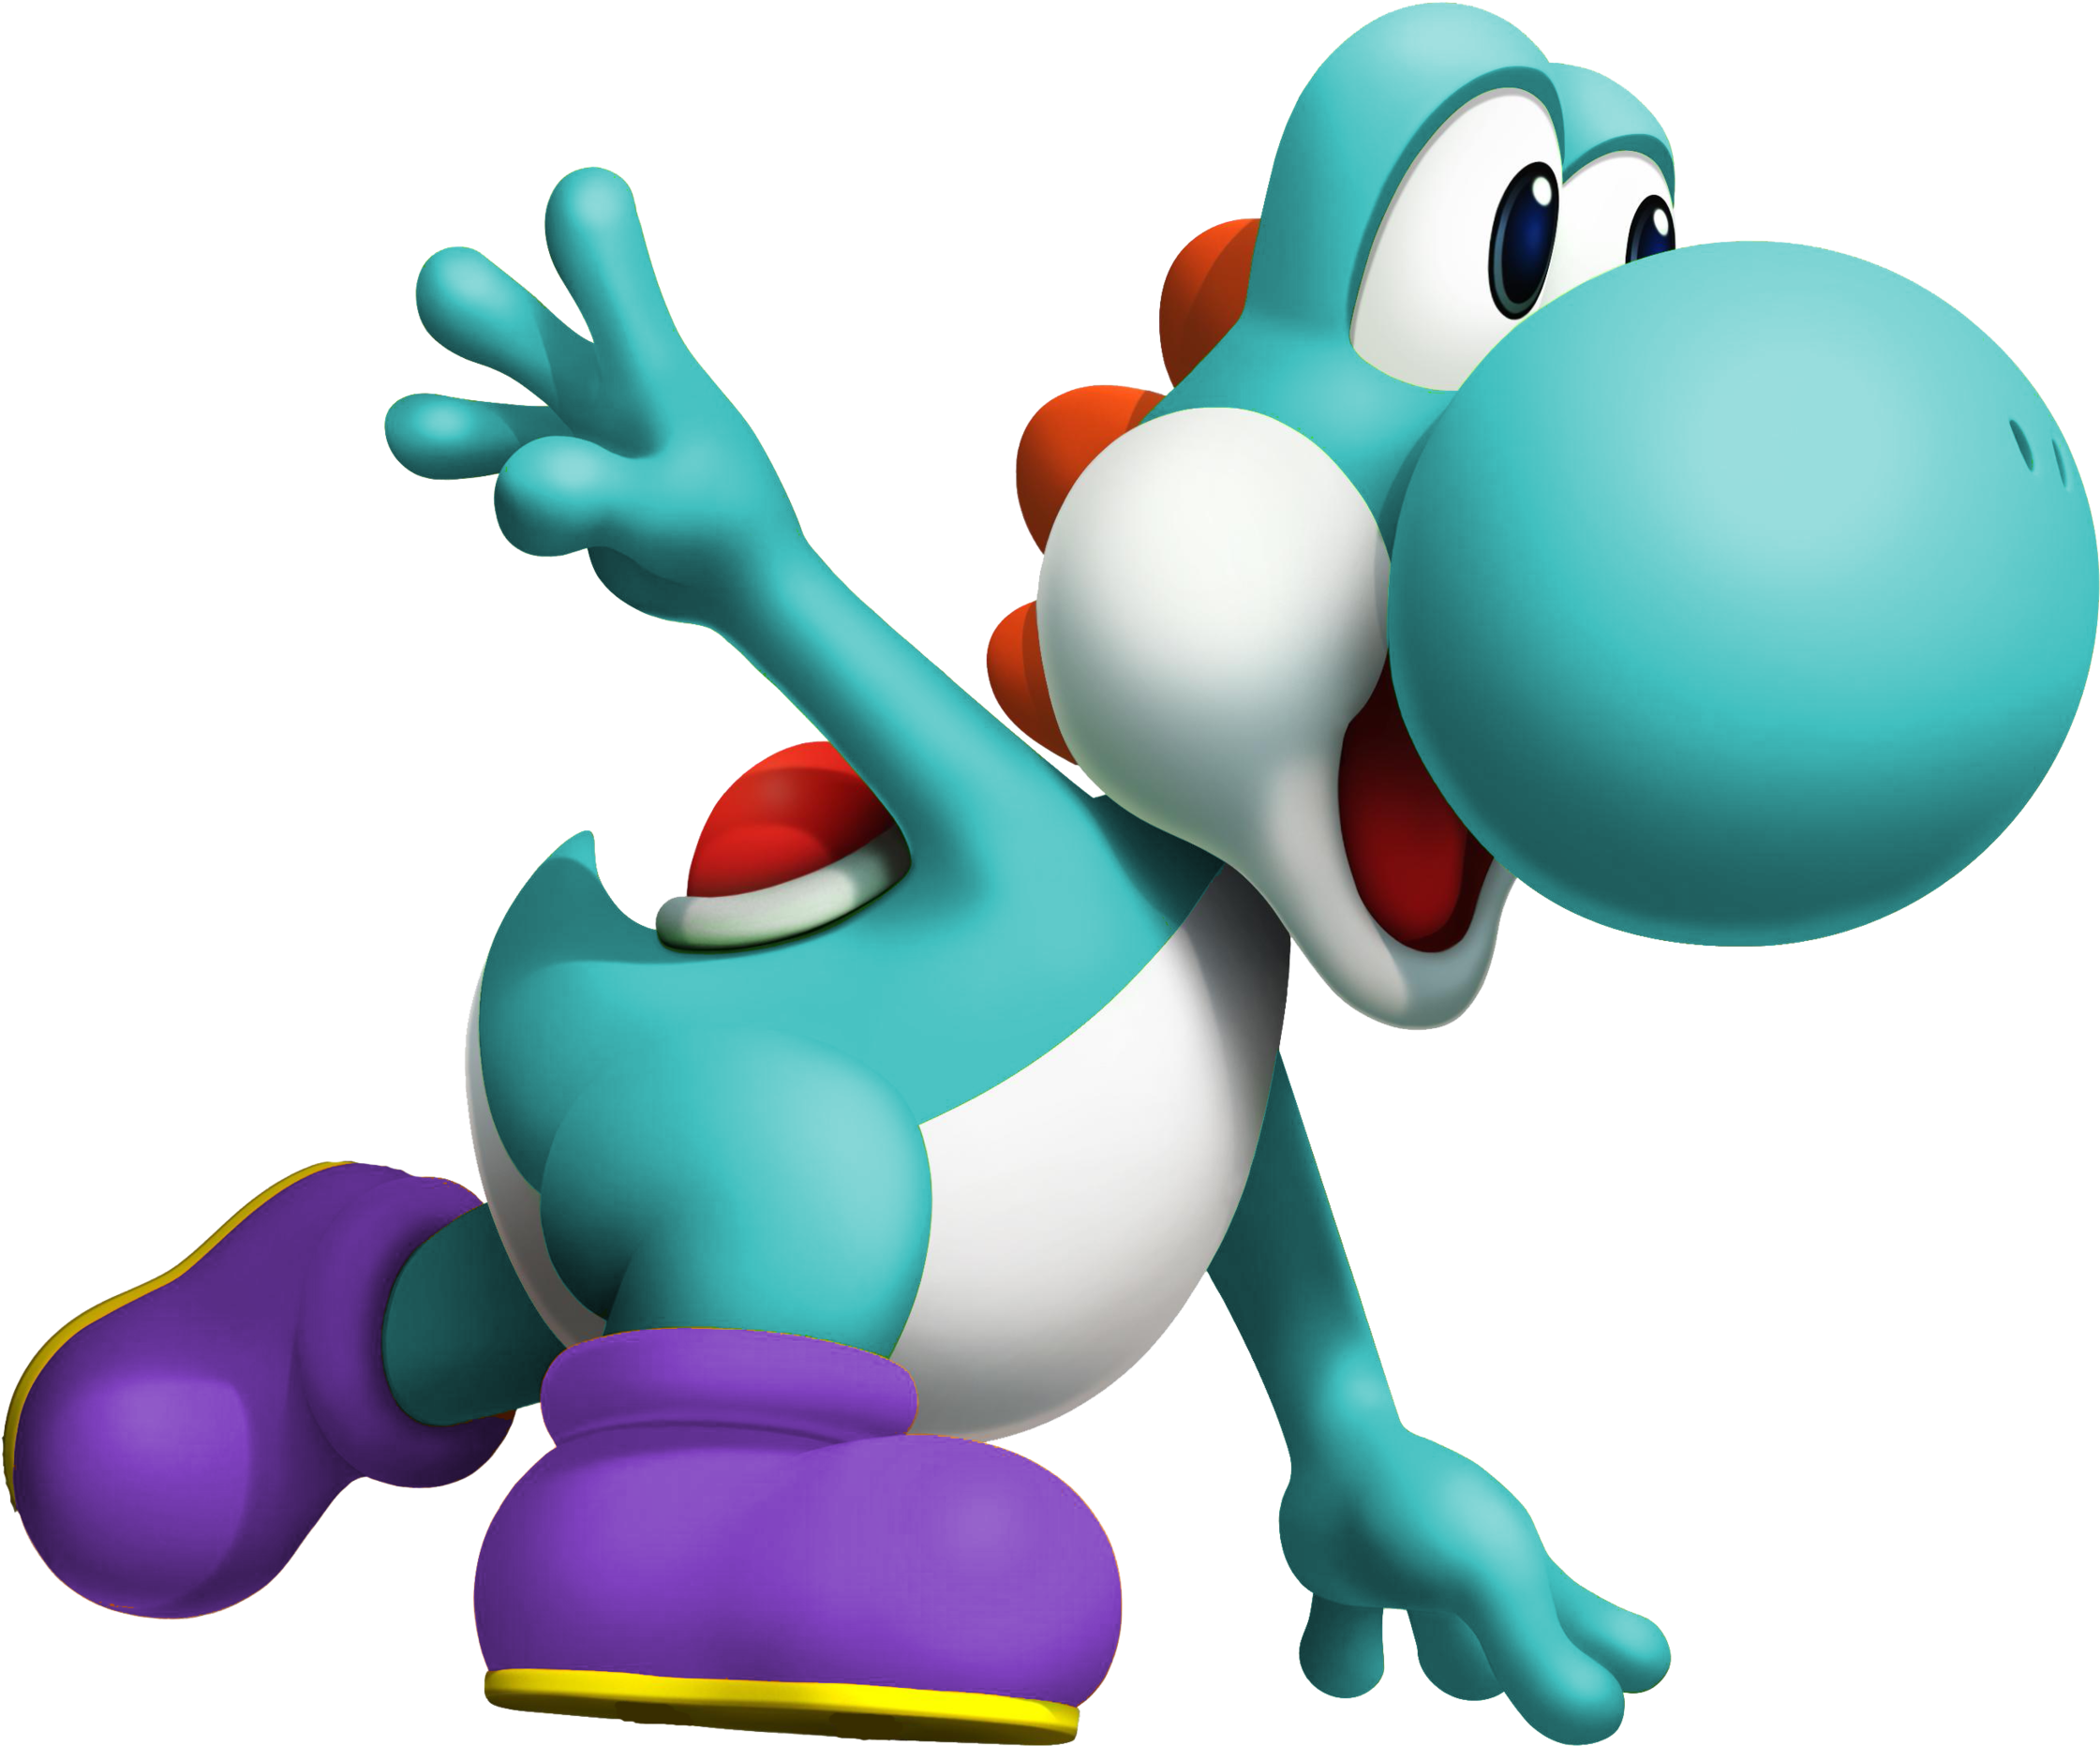 A Cartoon Character Of A Blue Yoshi